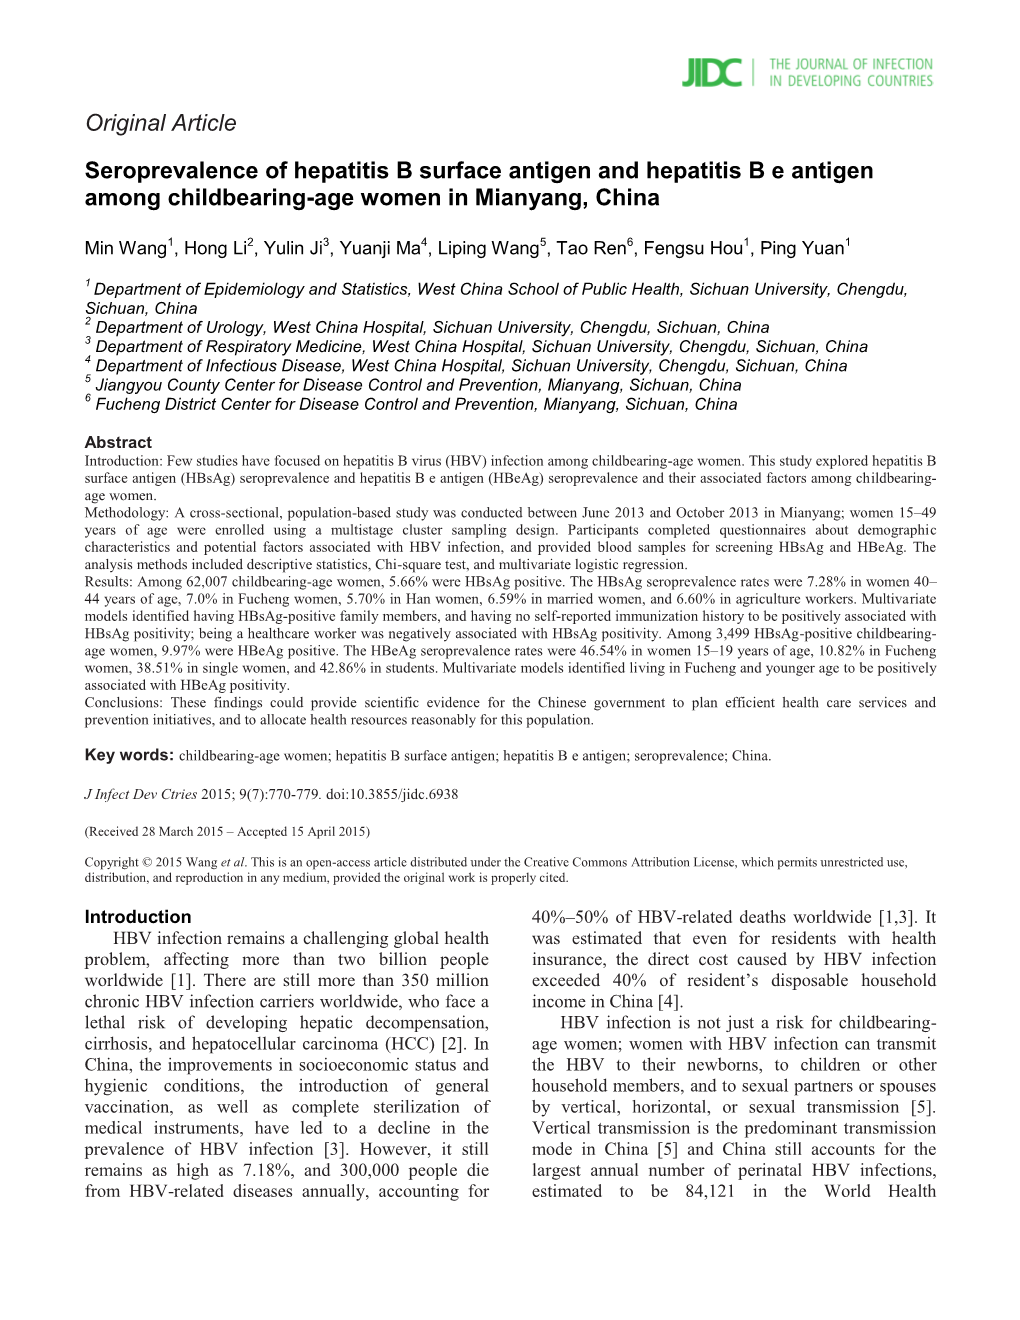 Seroprevalence of Hepatitis B Surface Antigen and Hepatitis B E Antigen Among Childbearing-Age Women in Mianyang, China